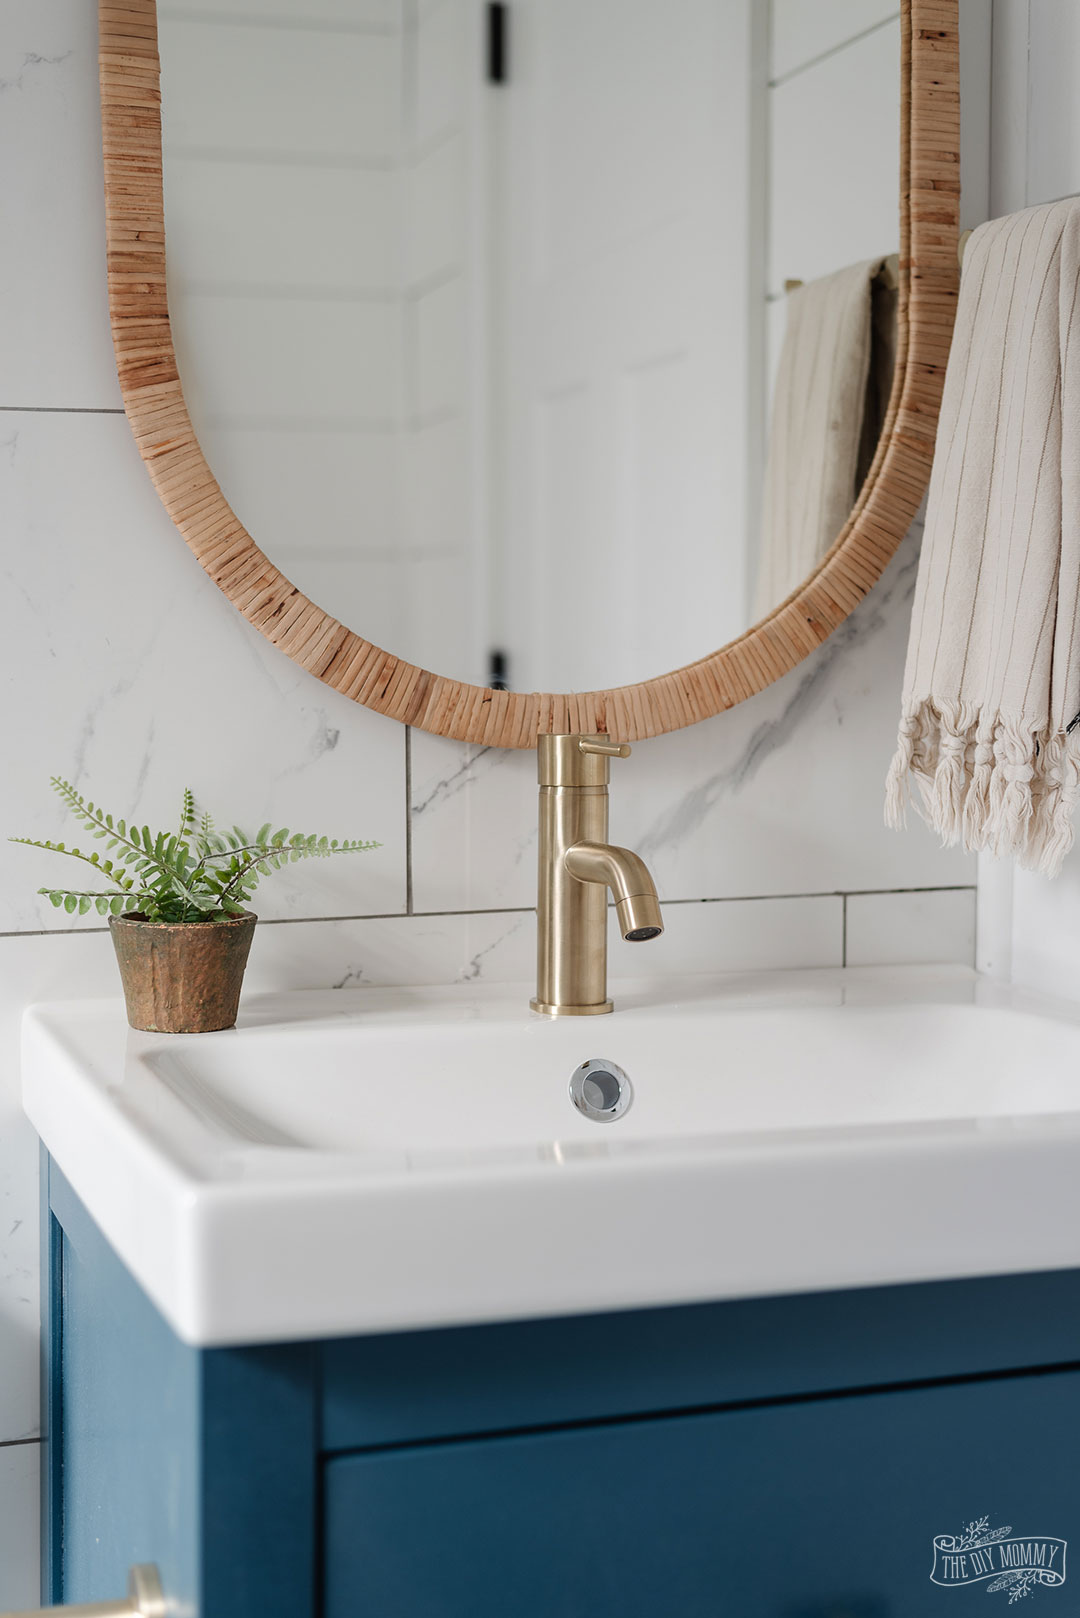 Painted bathroom vanity ideas - how to upgrade an IKEA vanity